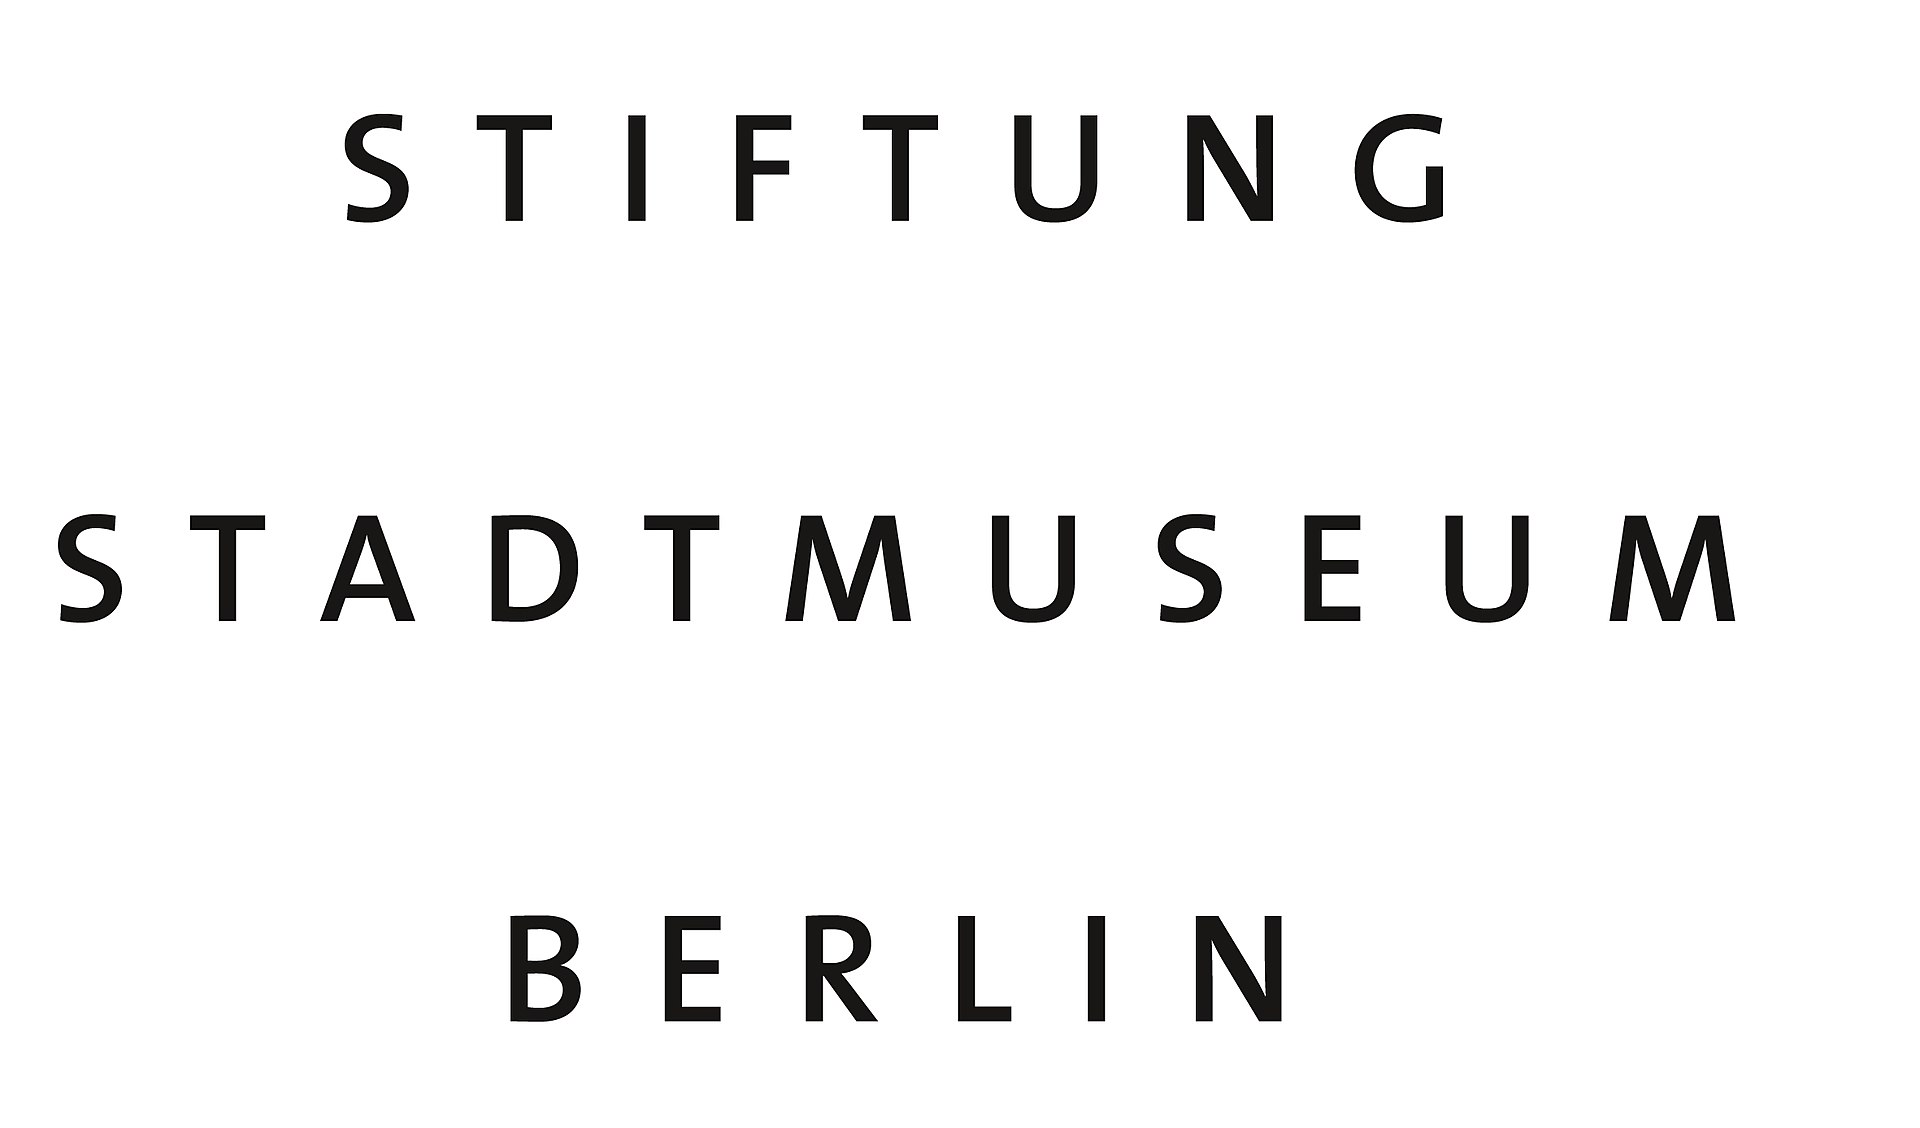 Stiftung Stadtmuseum Berlin - Sammlung Mode und Textilien